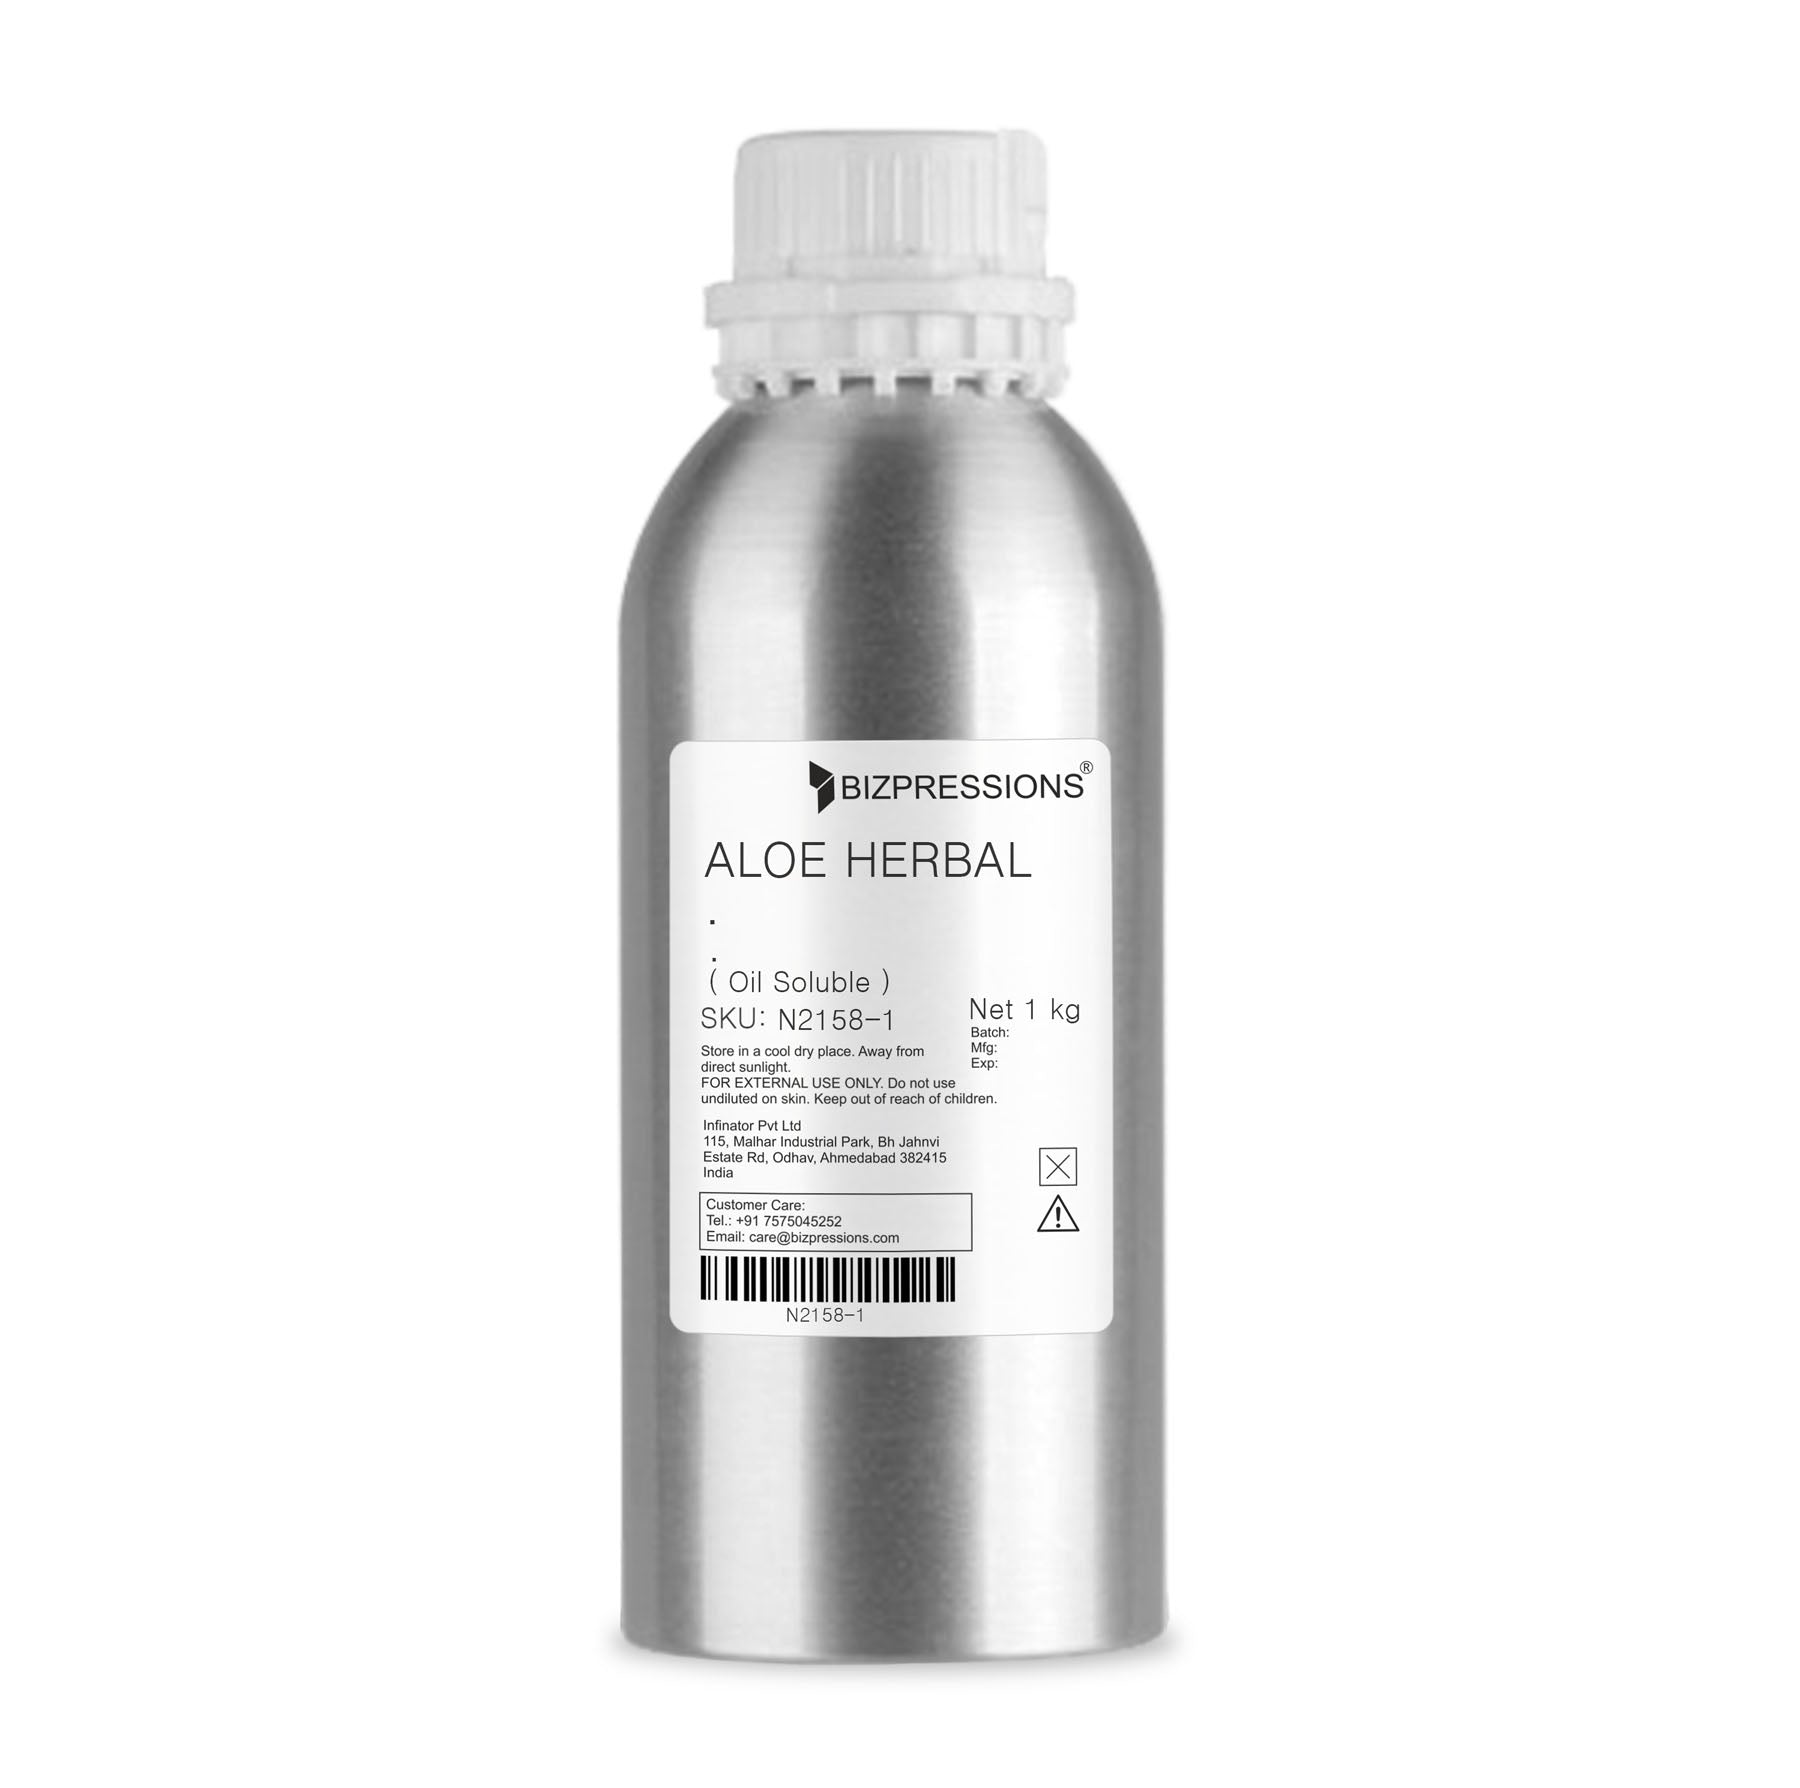 ALOE HERBAL - Fragrance ( Oil Soluble ) - 1 kg